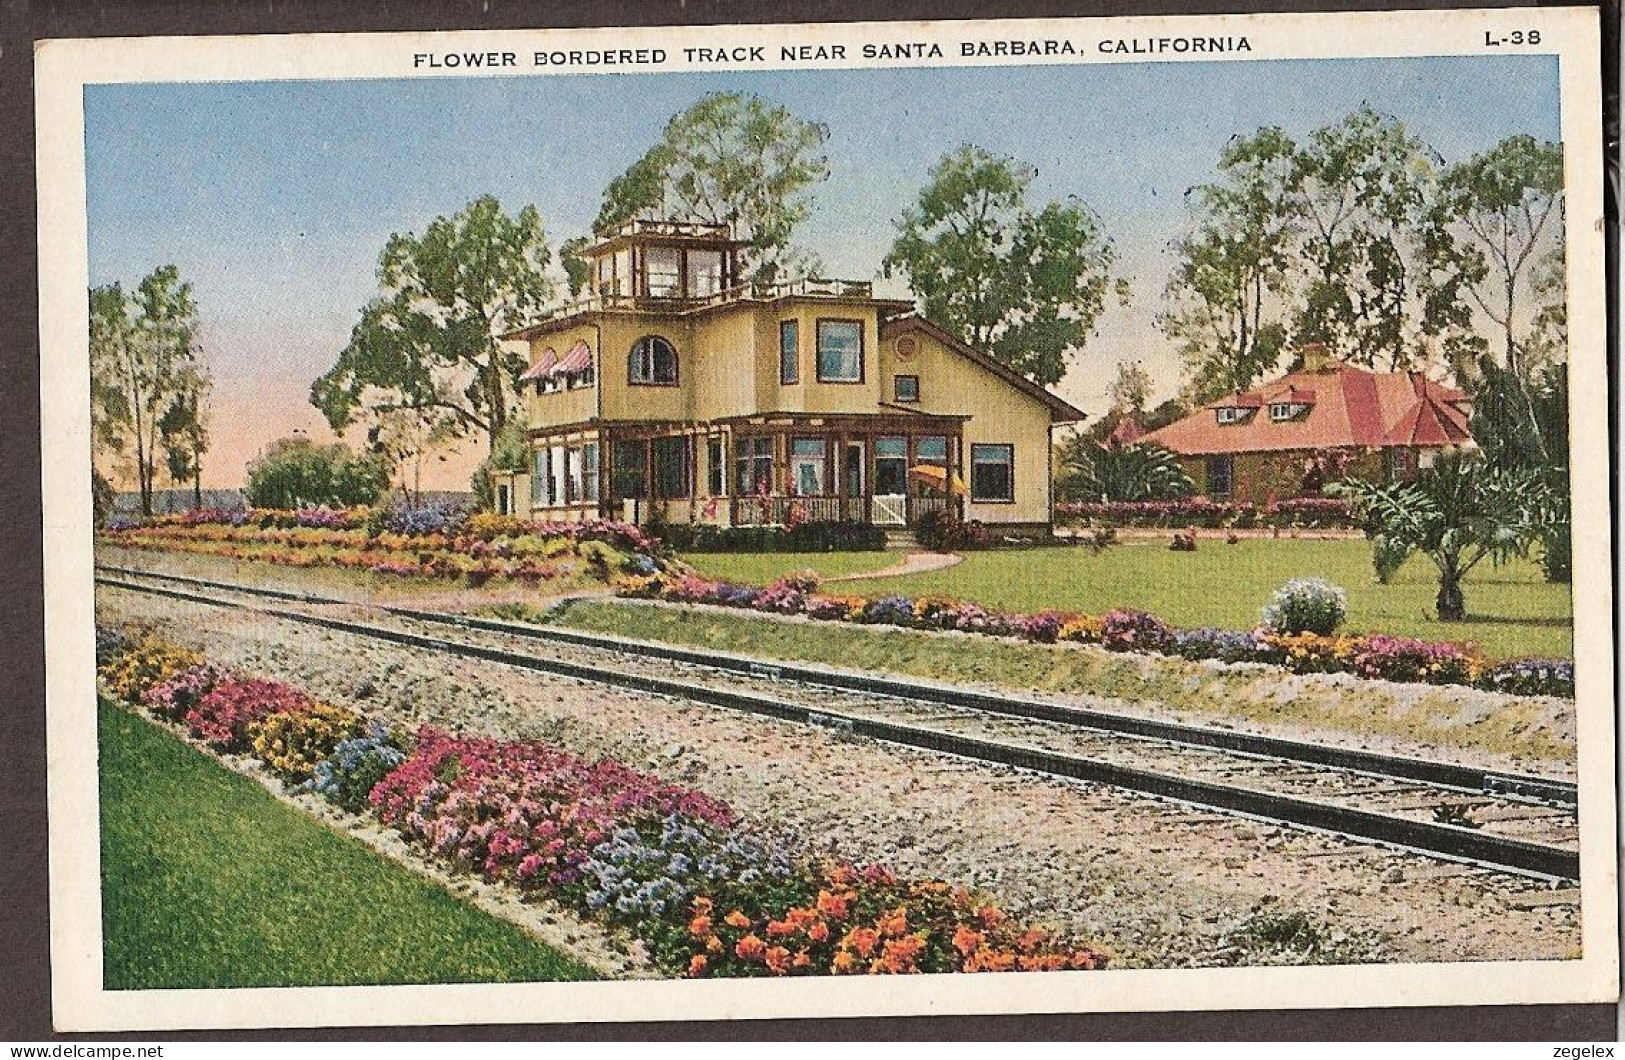 Flower Bordered Rail Road Near Santa Barbara, California - Railroad - Santa Barbara